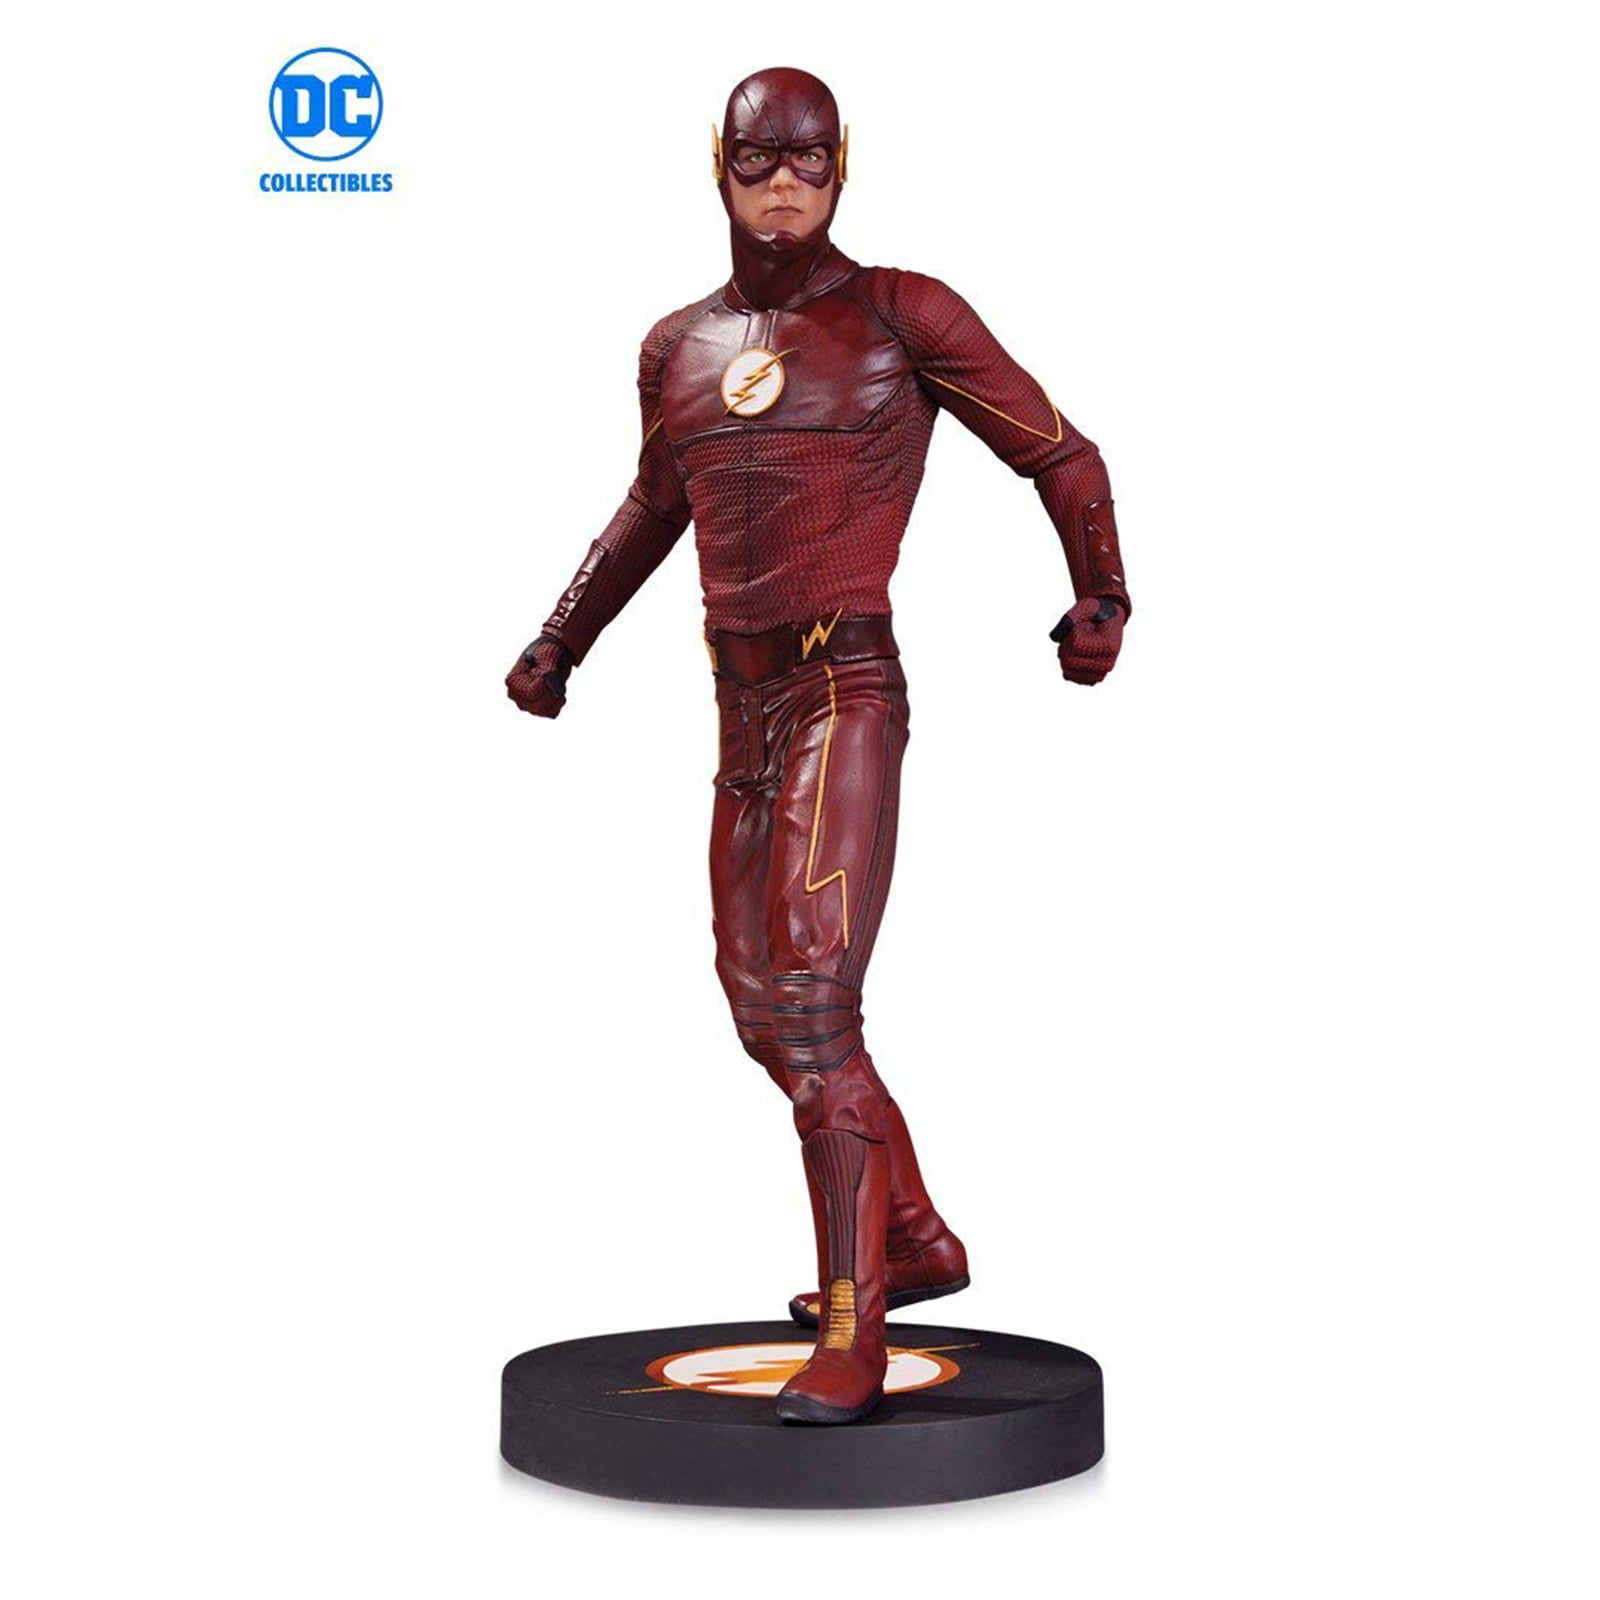 DC Collectibles The Flash Kid Action Figure - Walmart.com